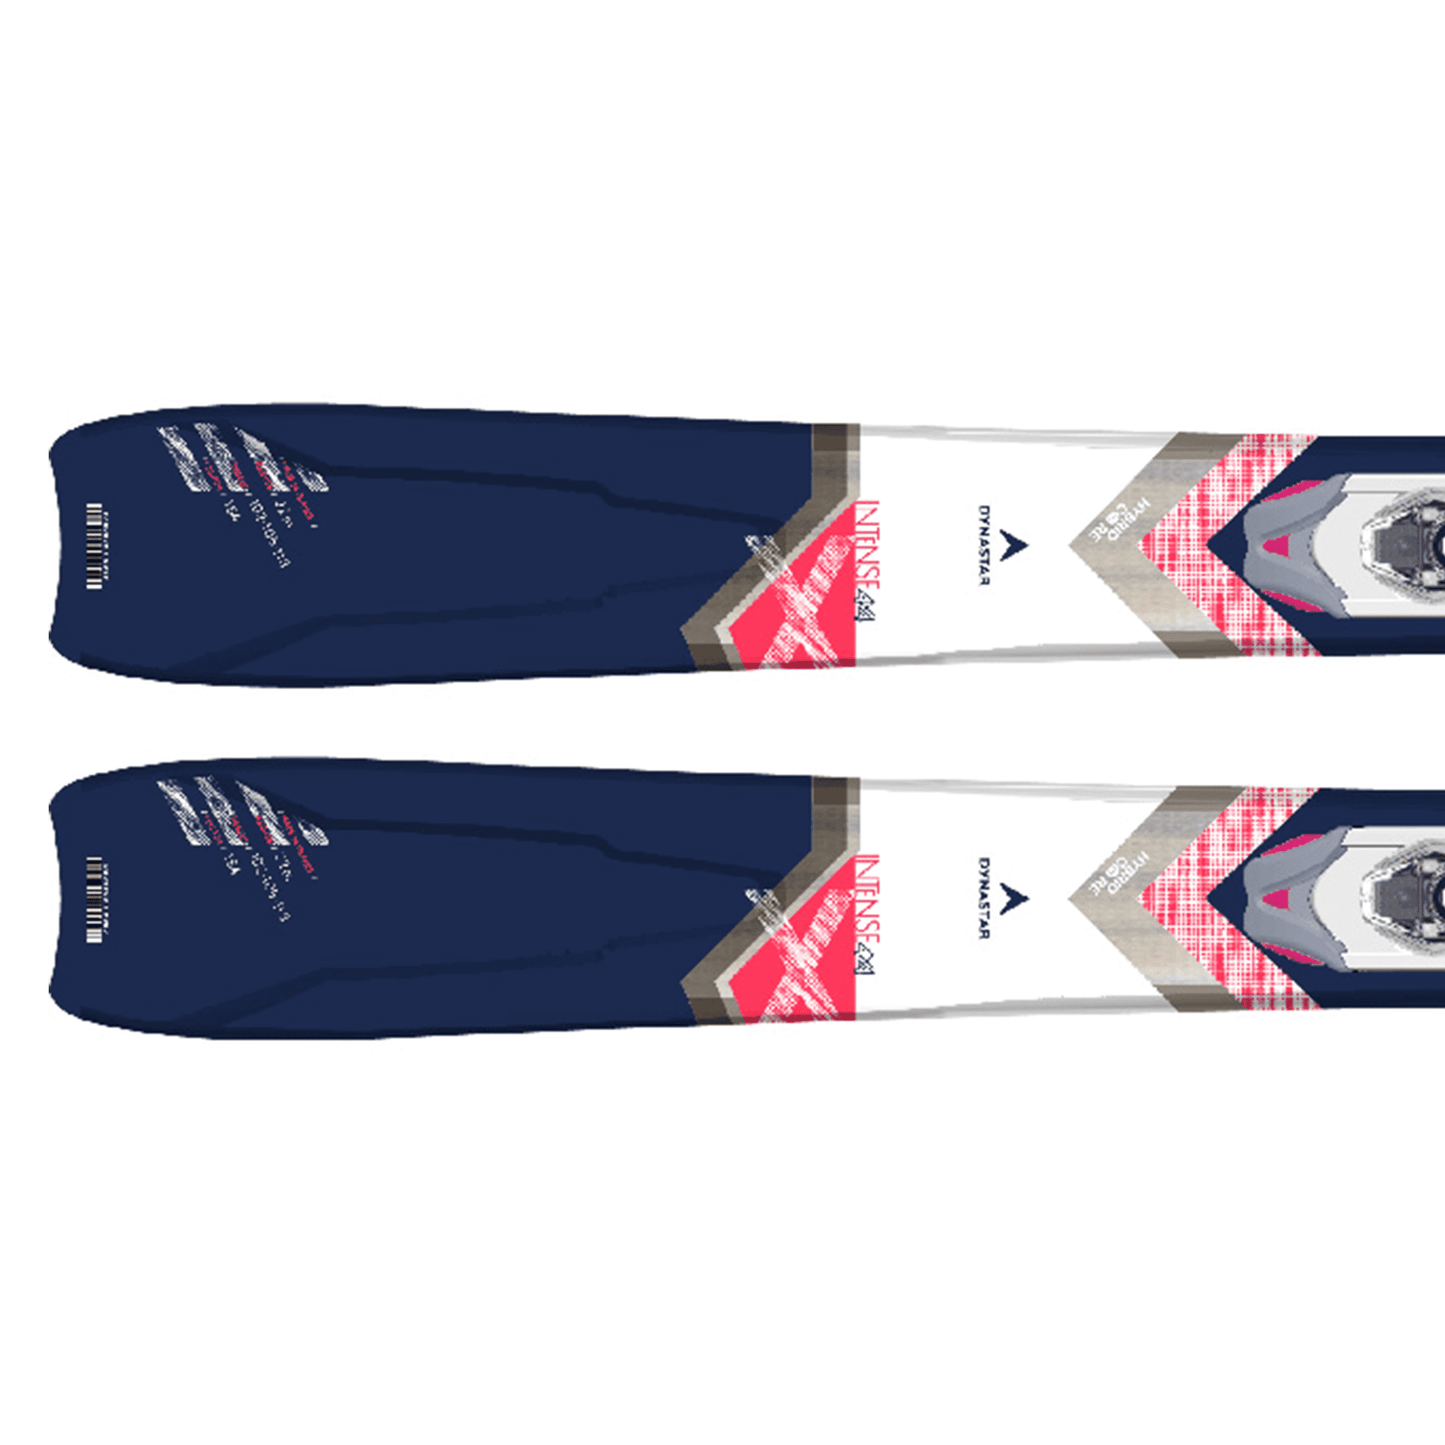 Dynastar Intense 4X4 82 Women's Skis Inc Xpress W11 Bindings (2021)